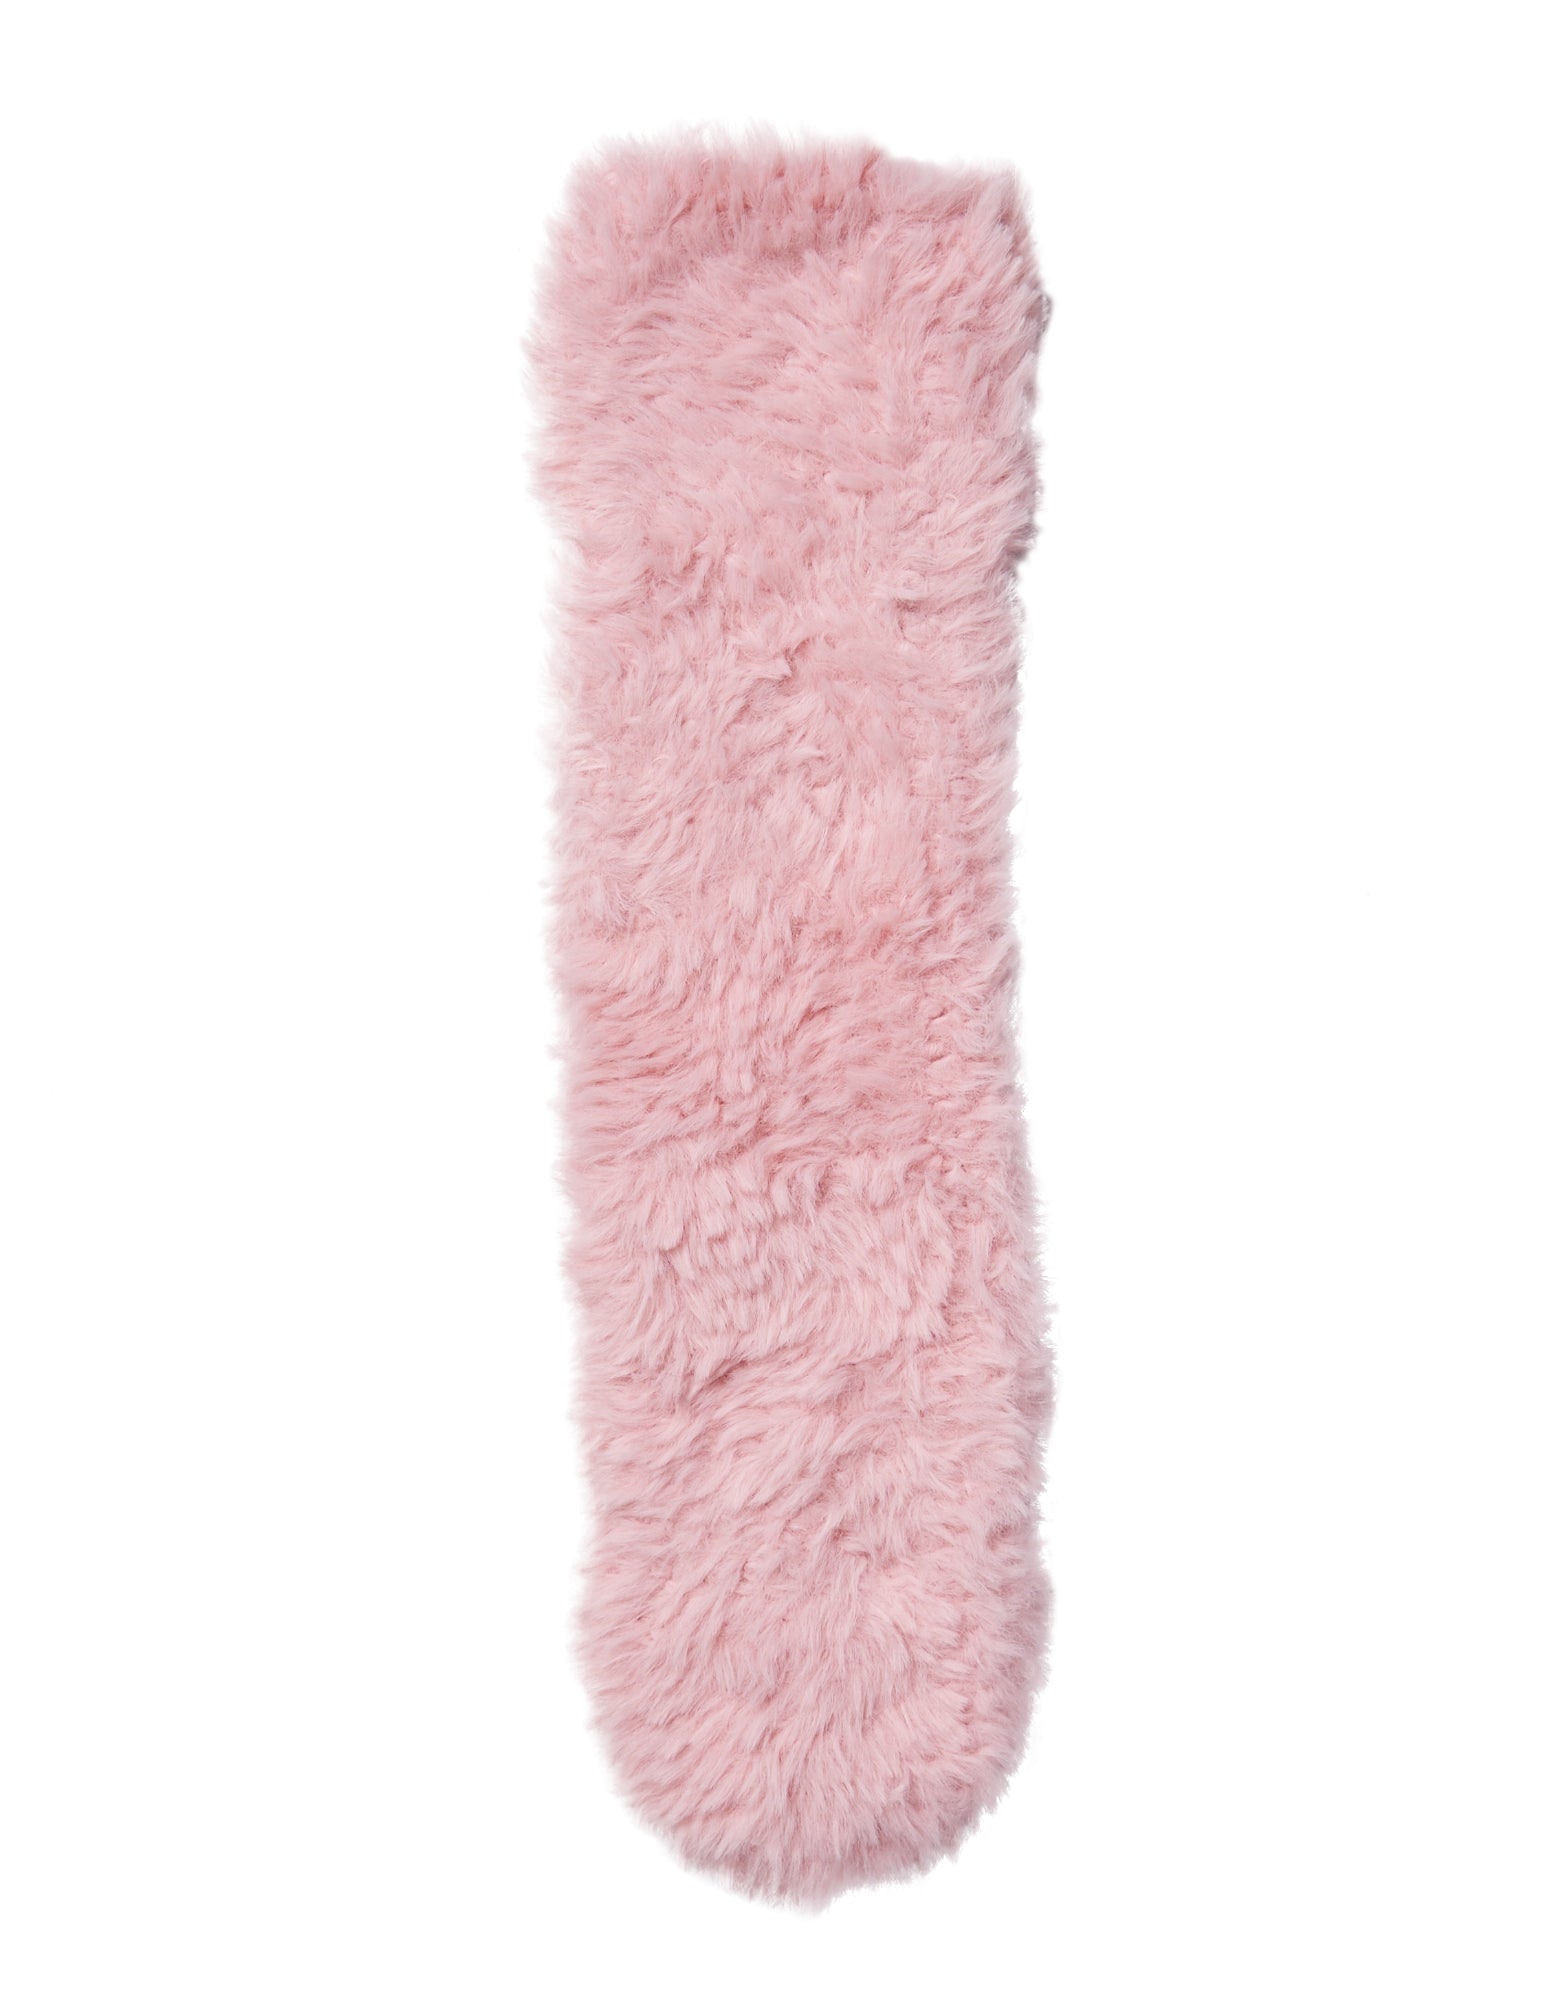 Top of Simon de Winter Women's Cosy Home Socks in Soft Pink